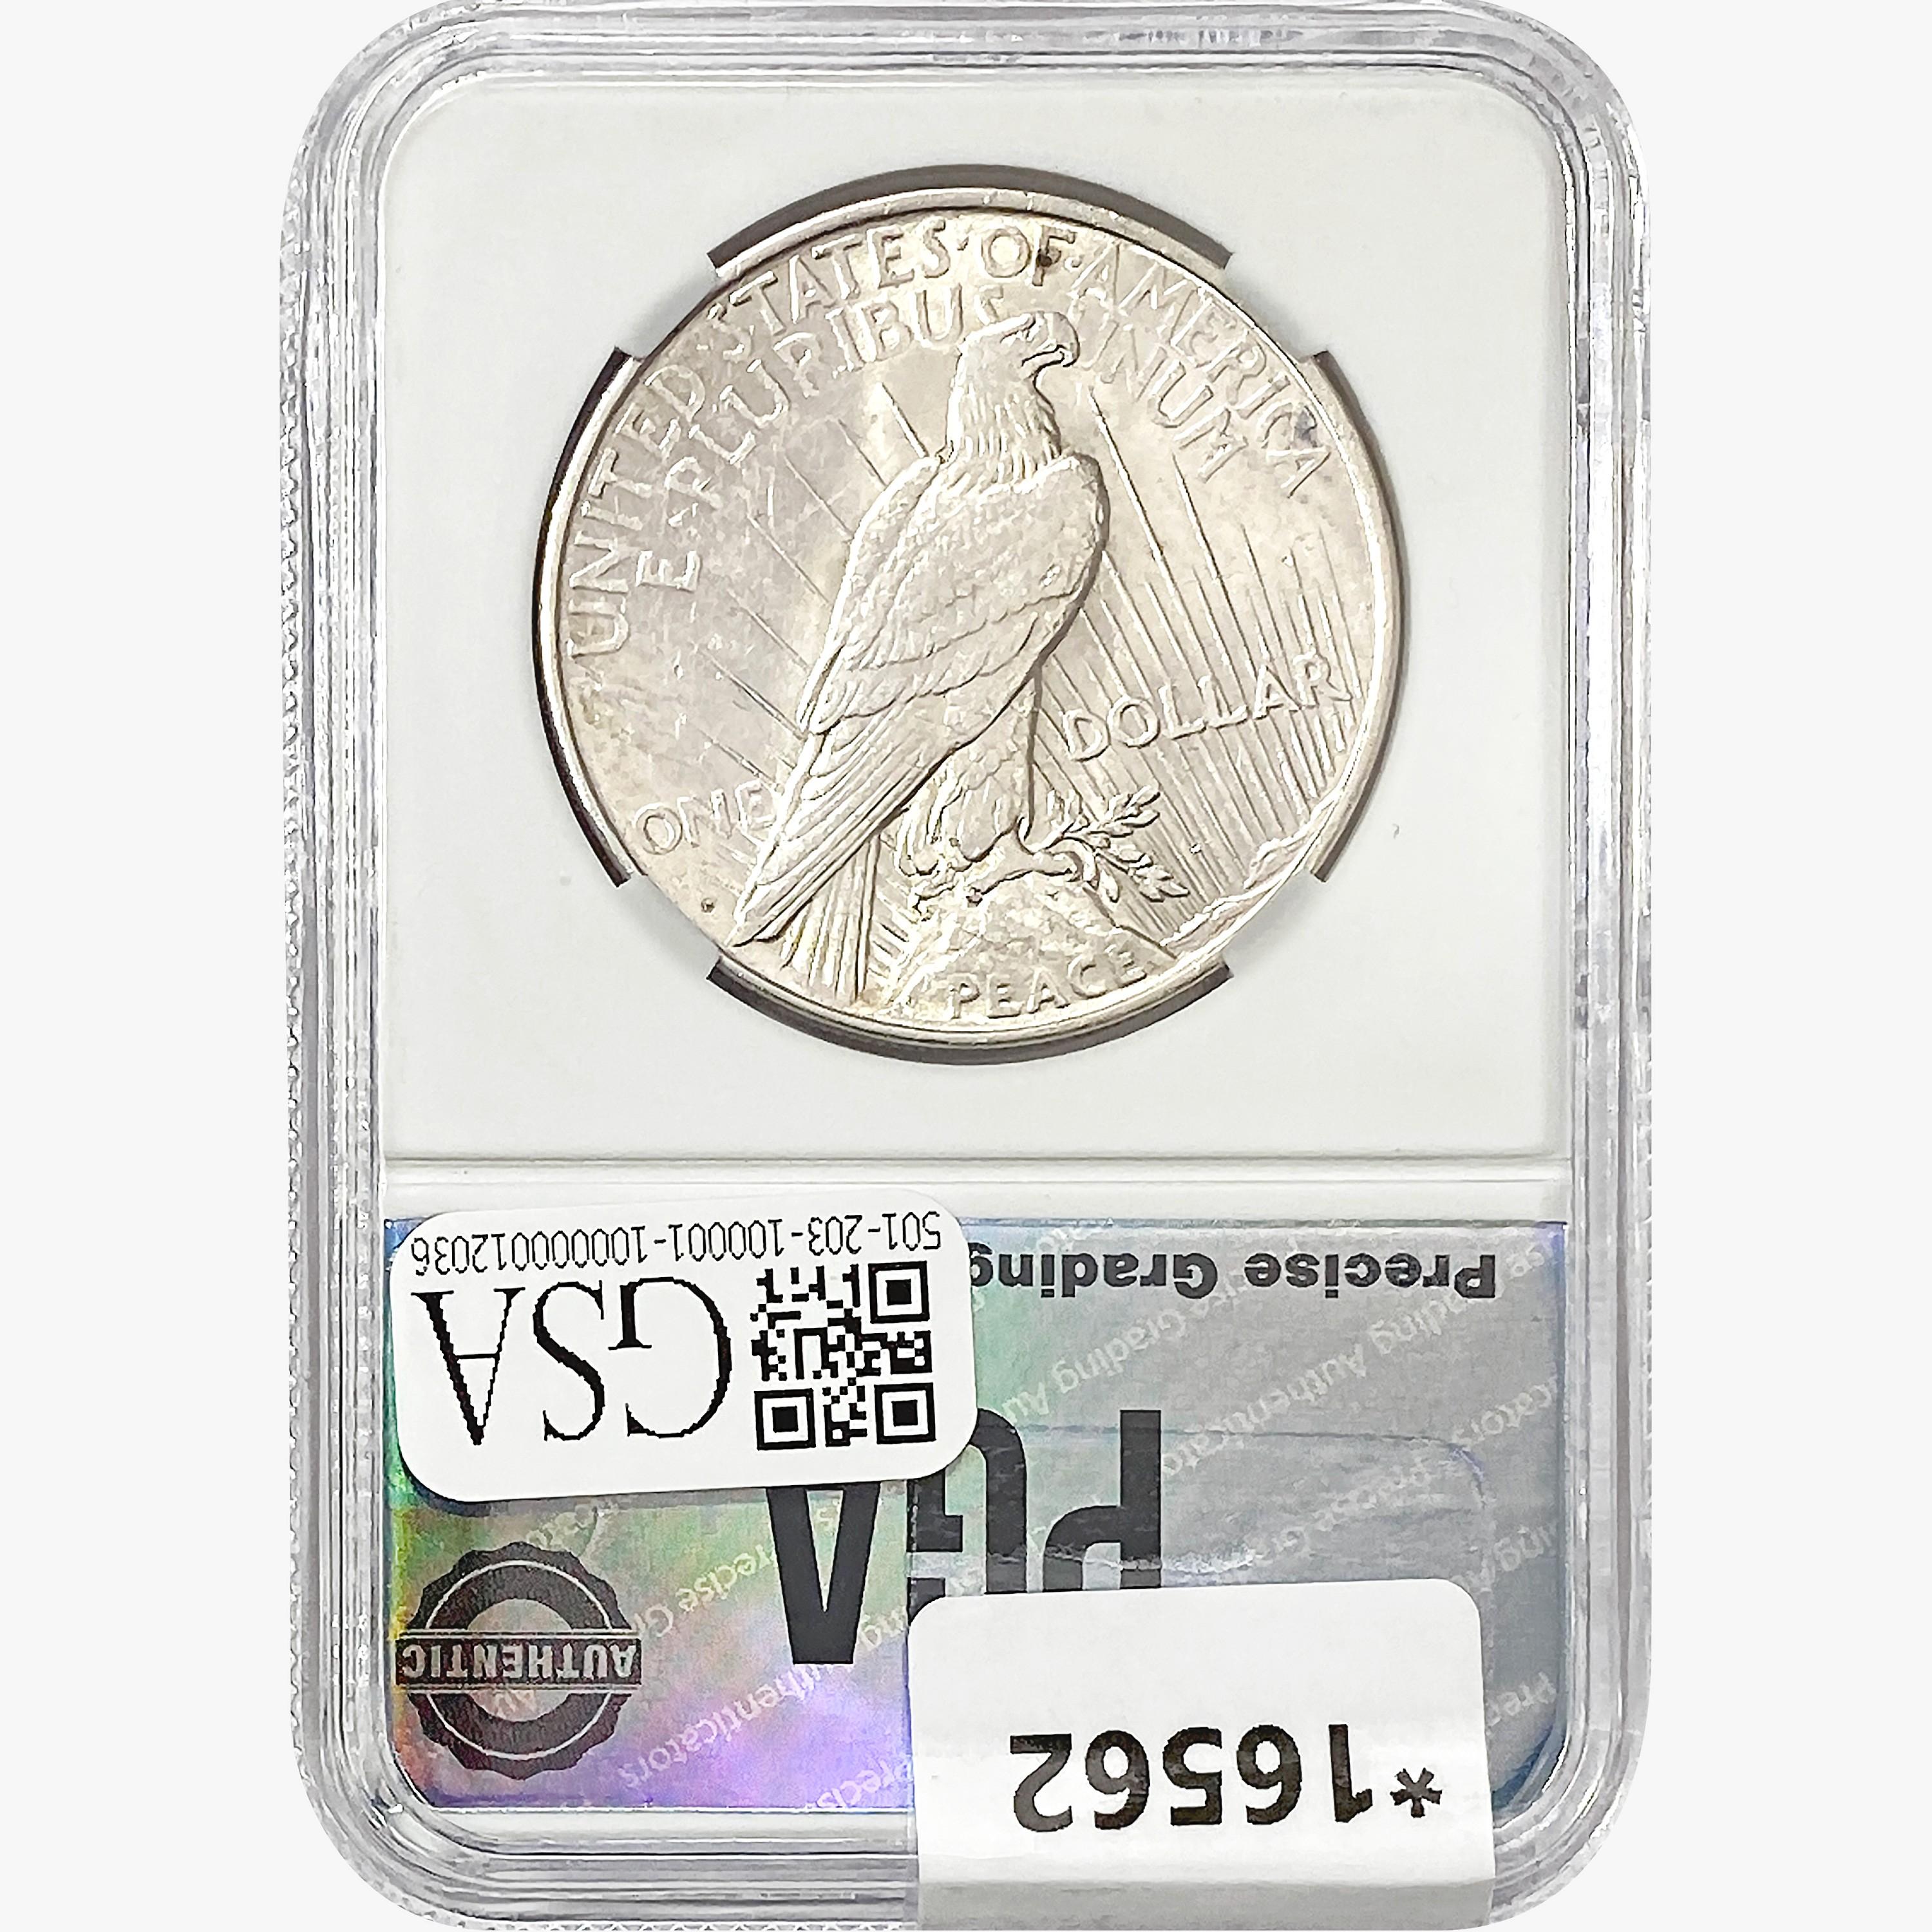 1927-D Silver Peace Dollar PGA MS61